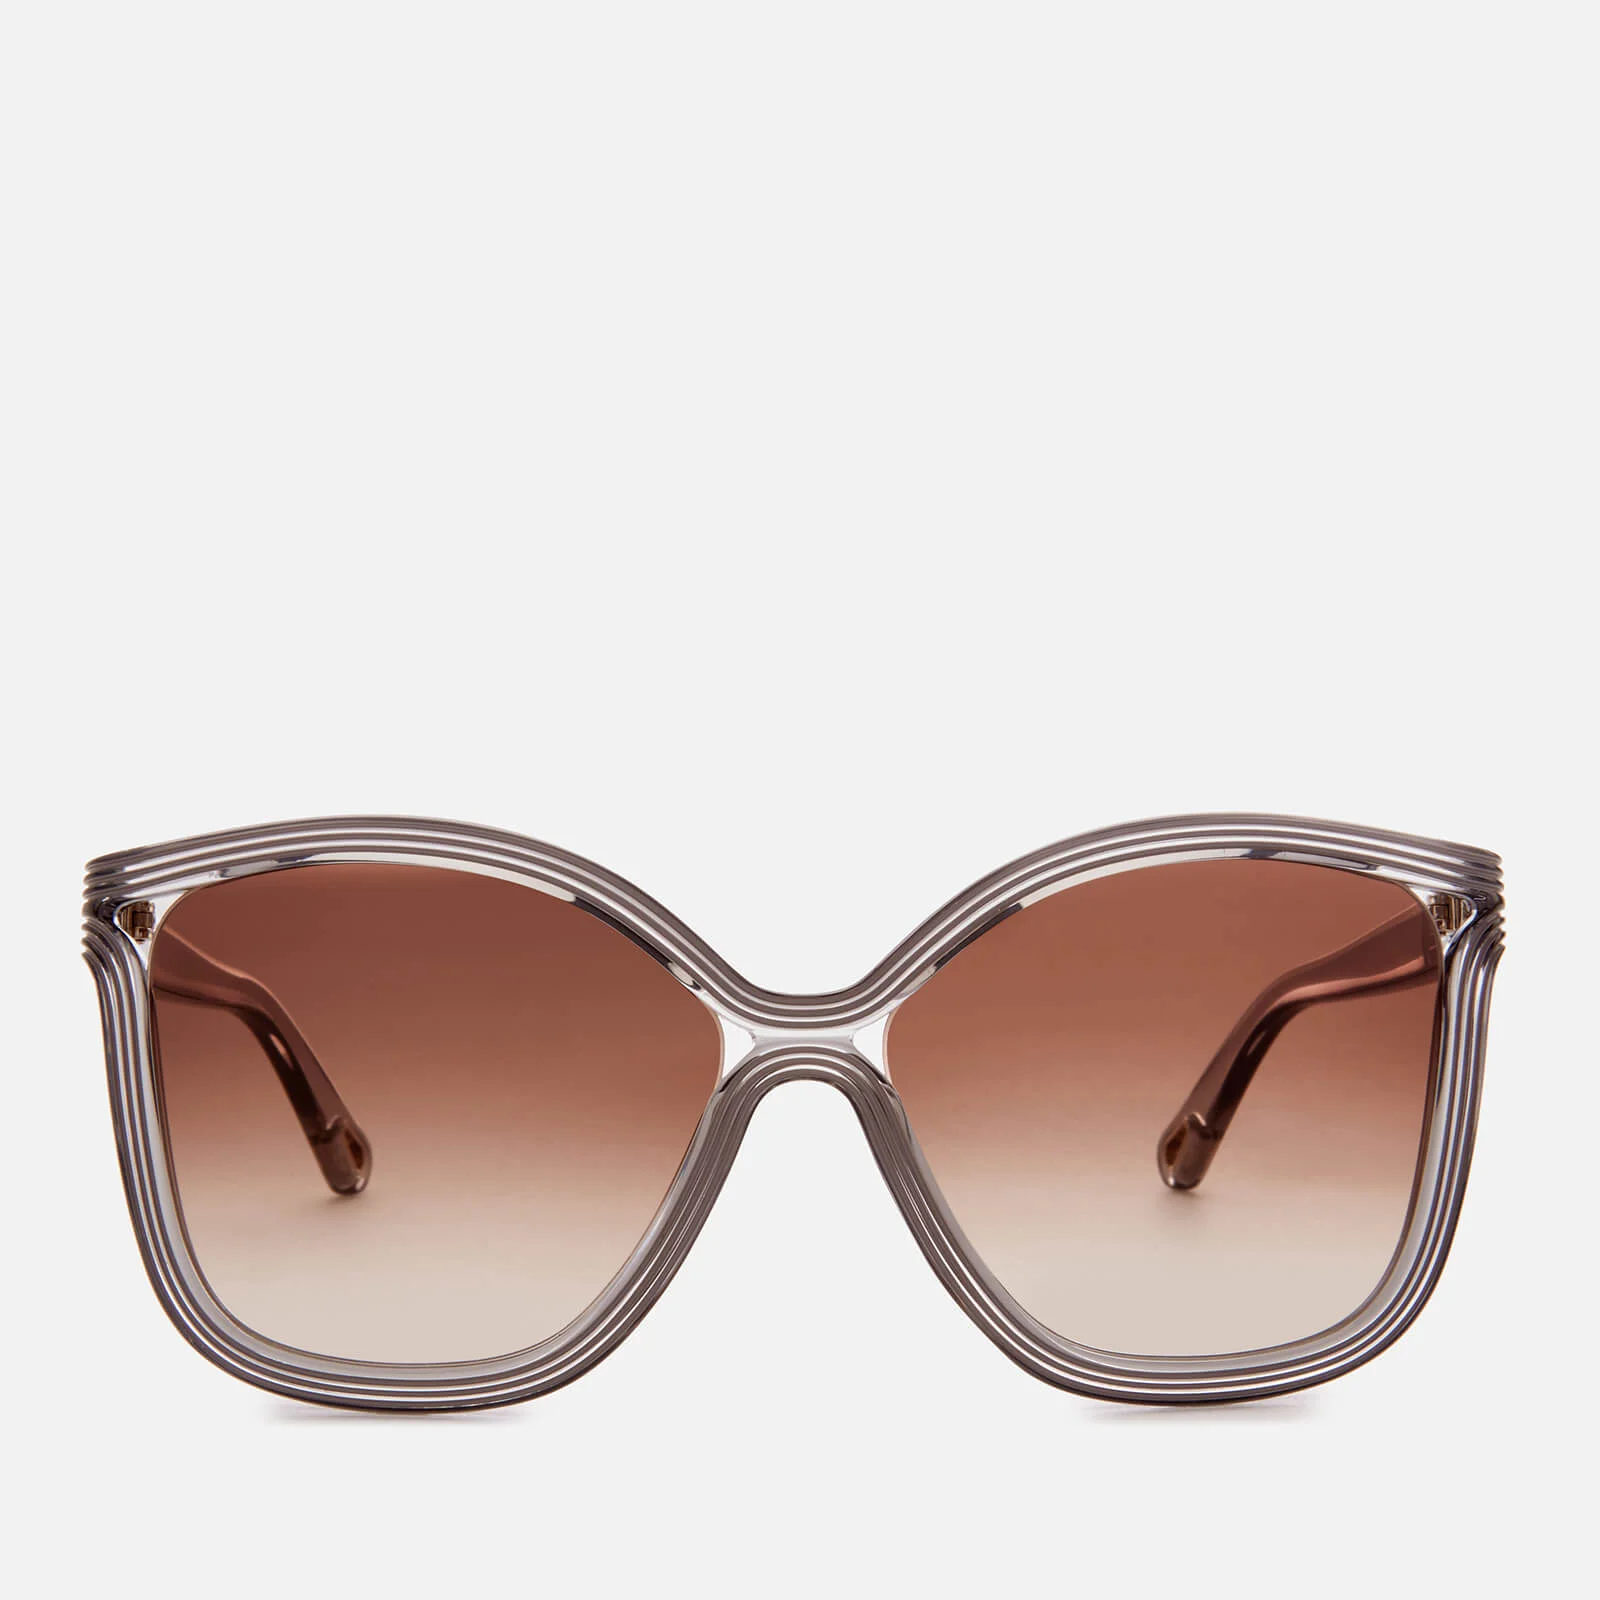 Chloe Women's Rita Acetate Sunglasses - Grey Image 1